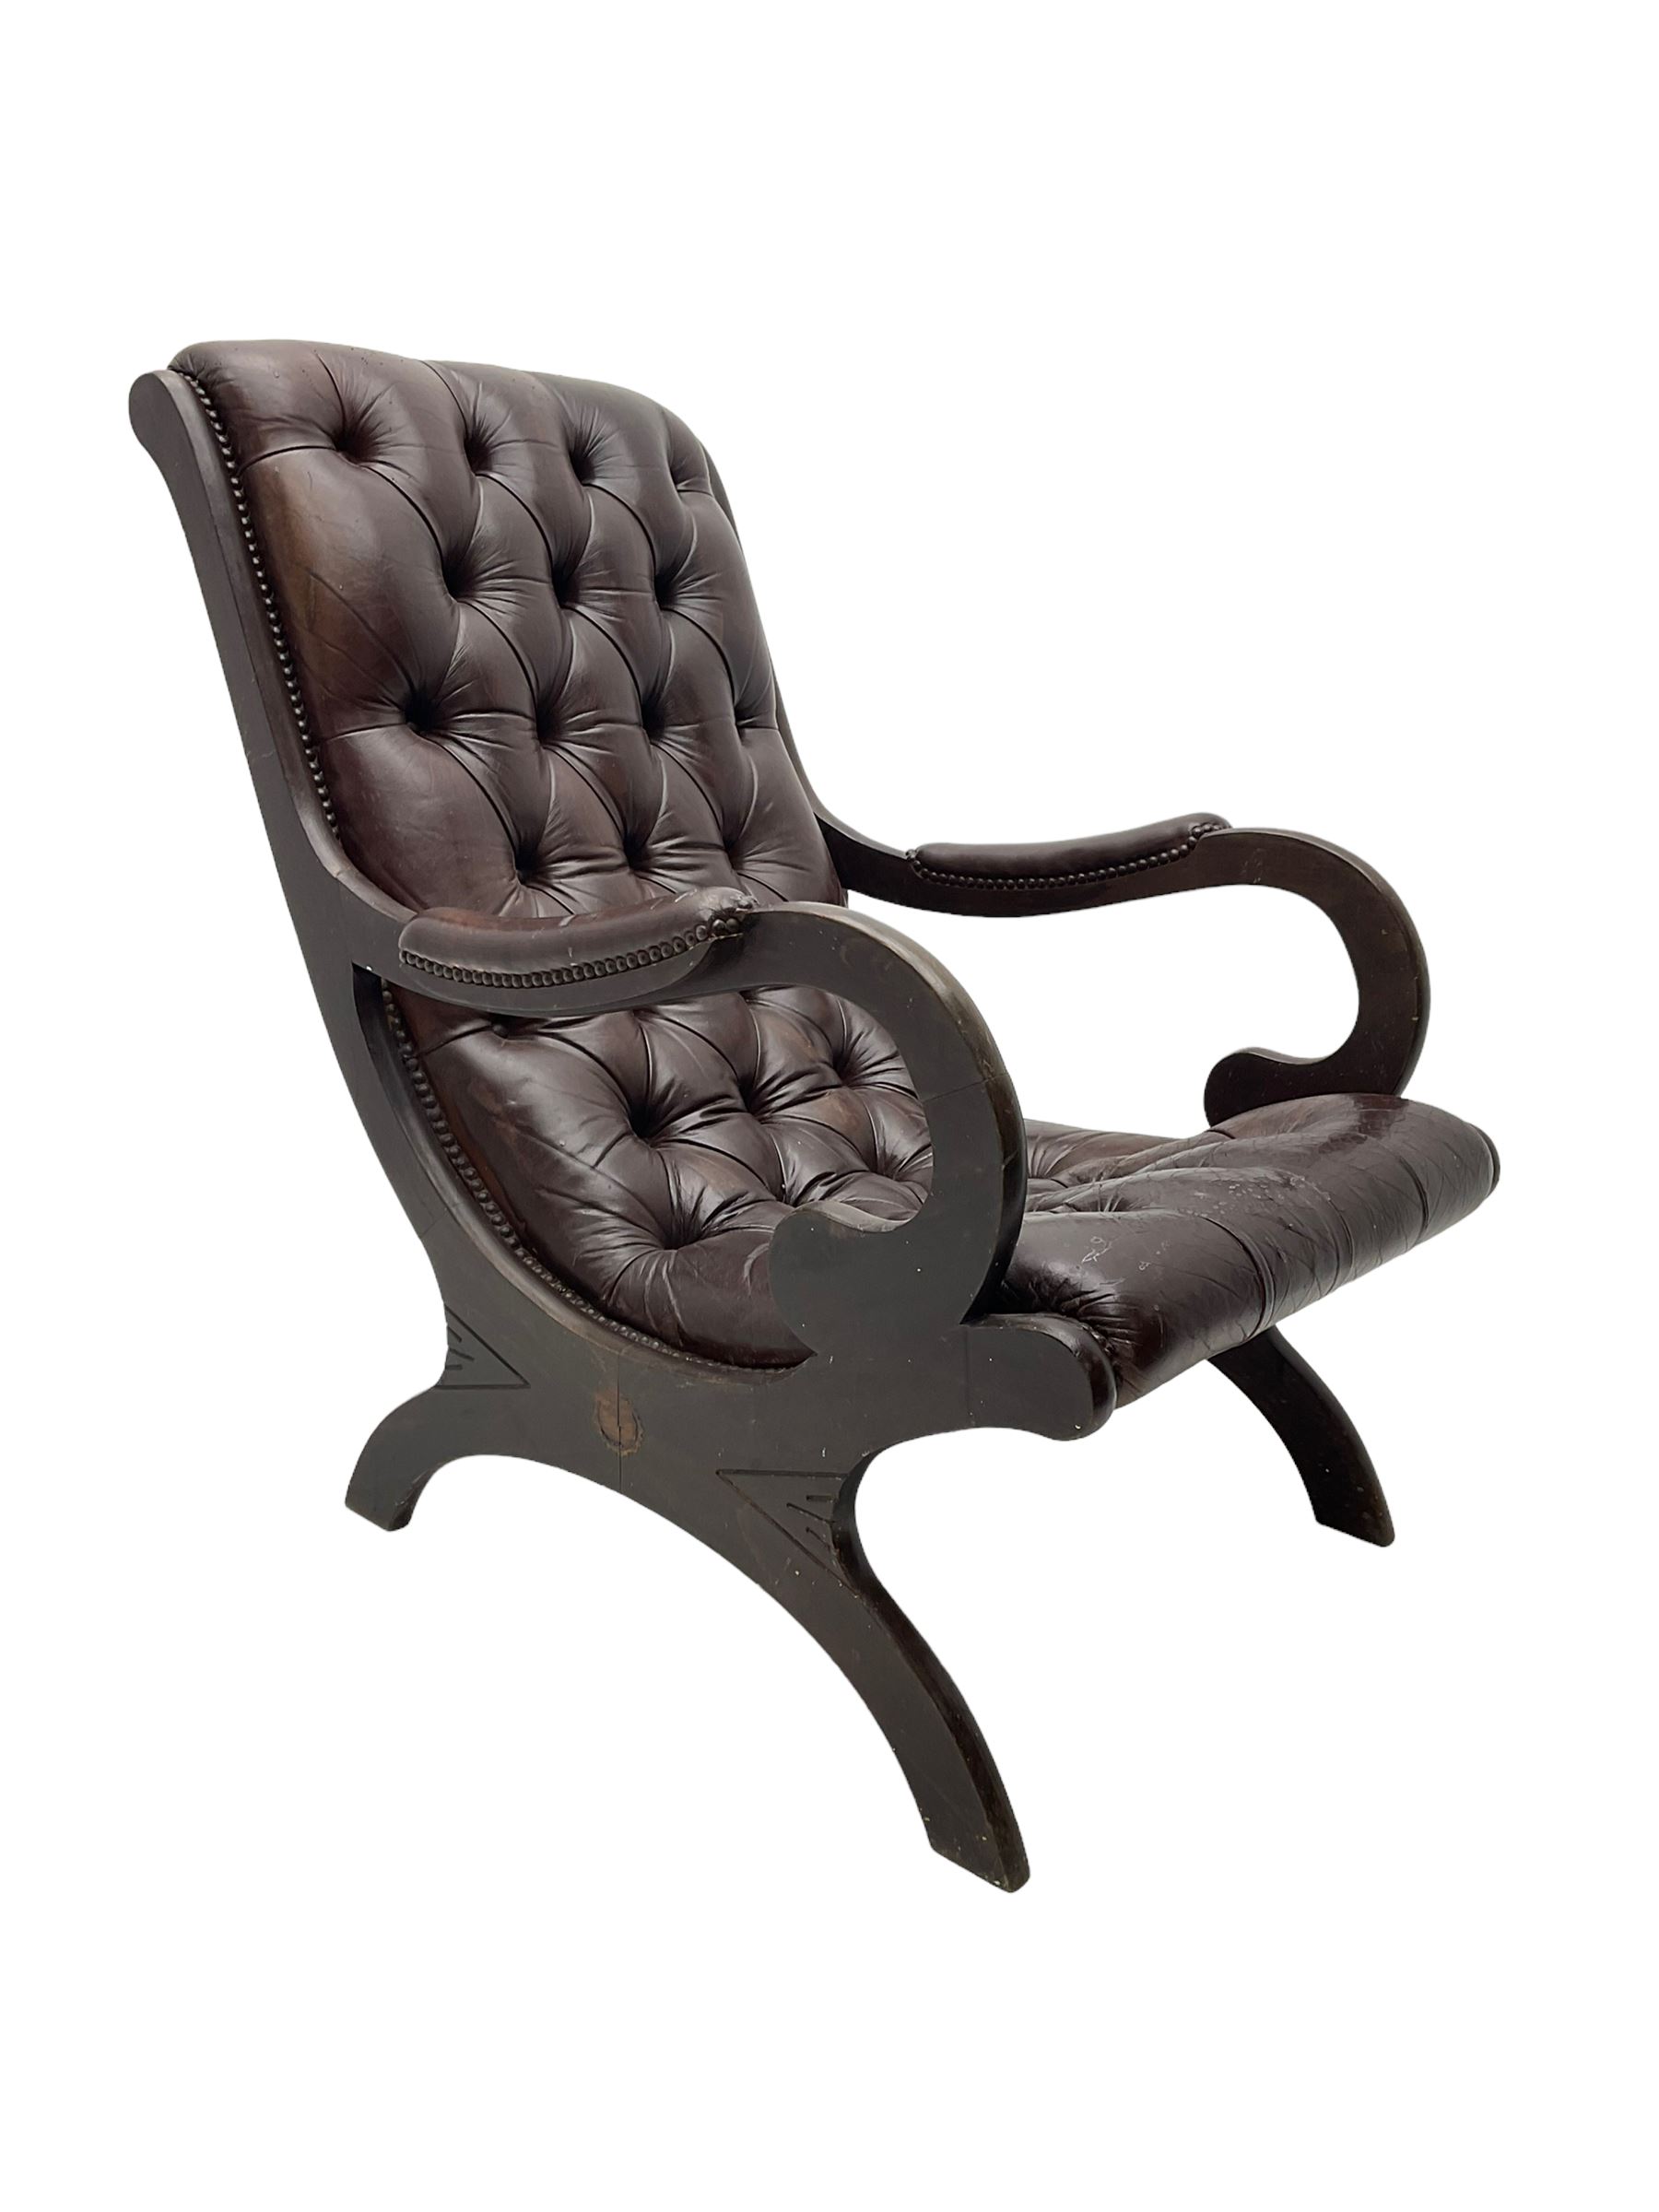 Regency style armchair - Image 4 of 6